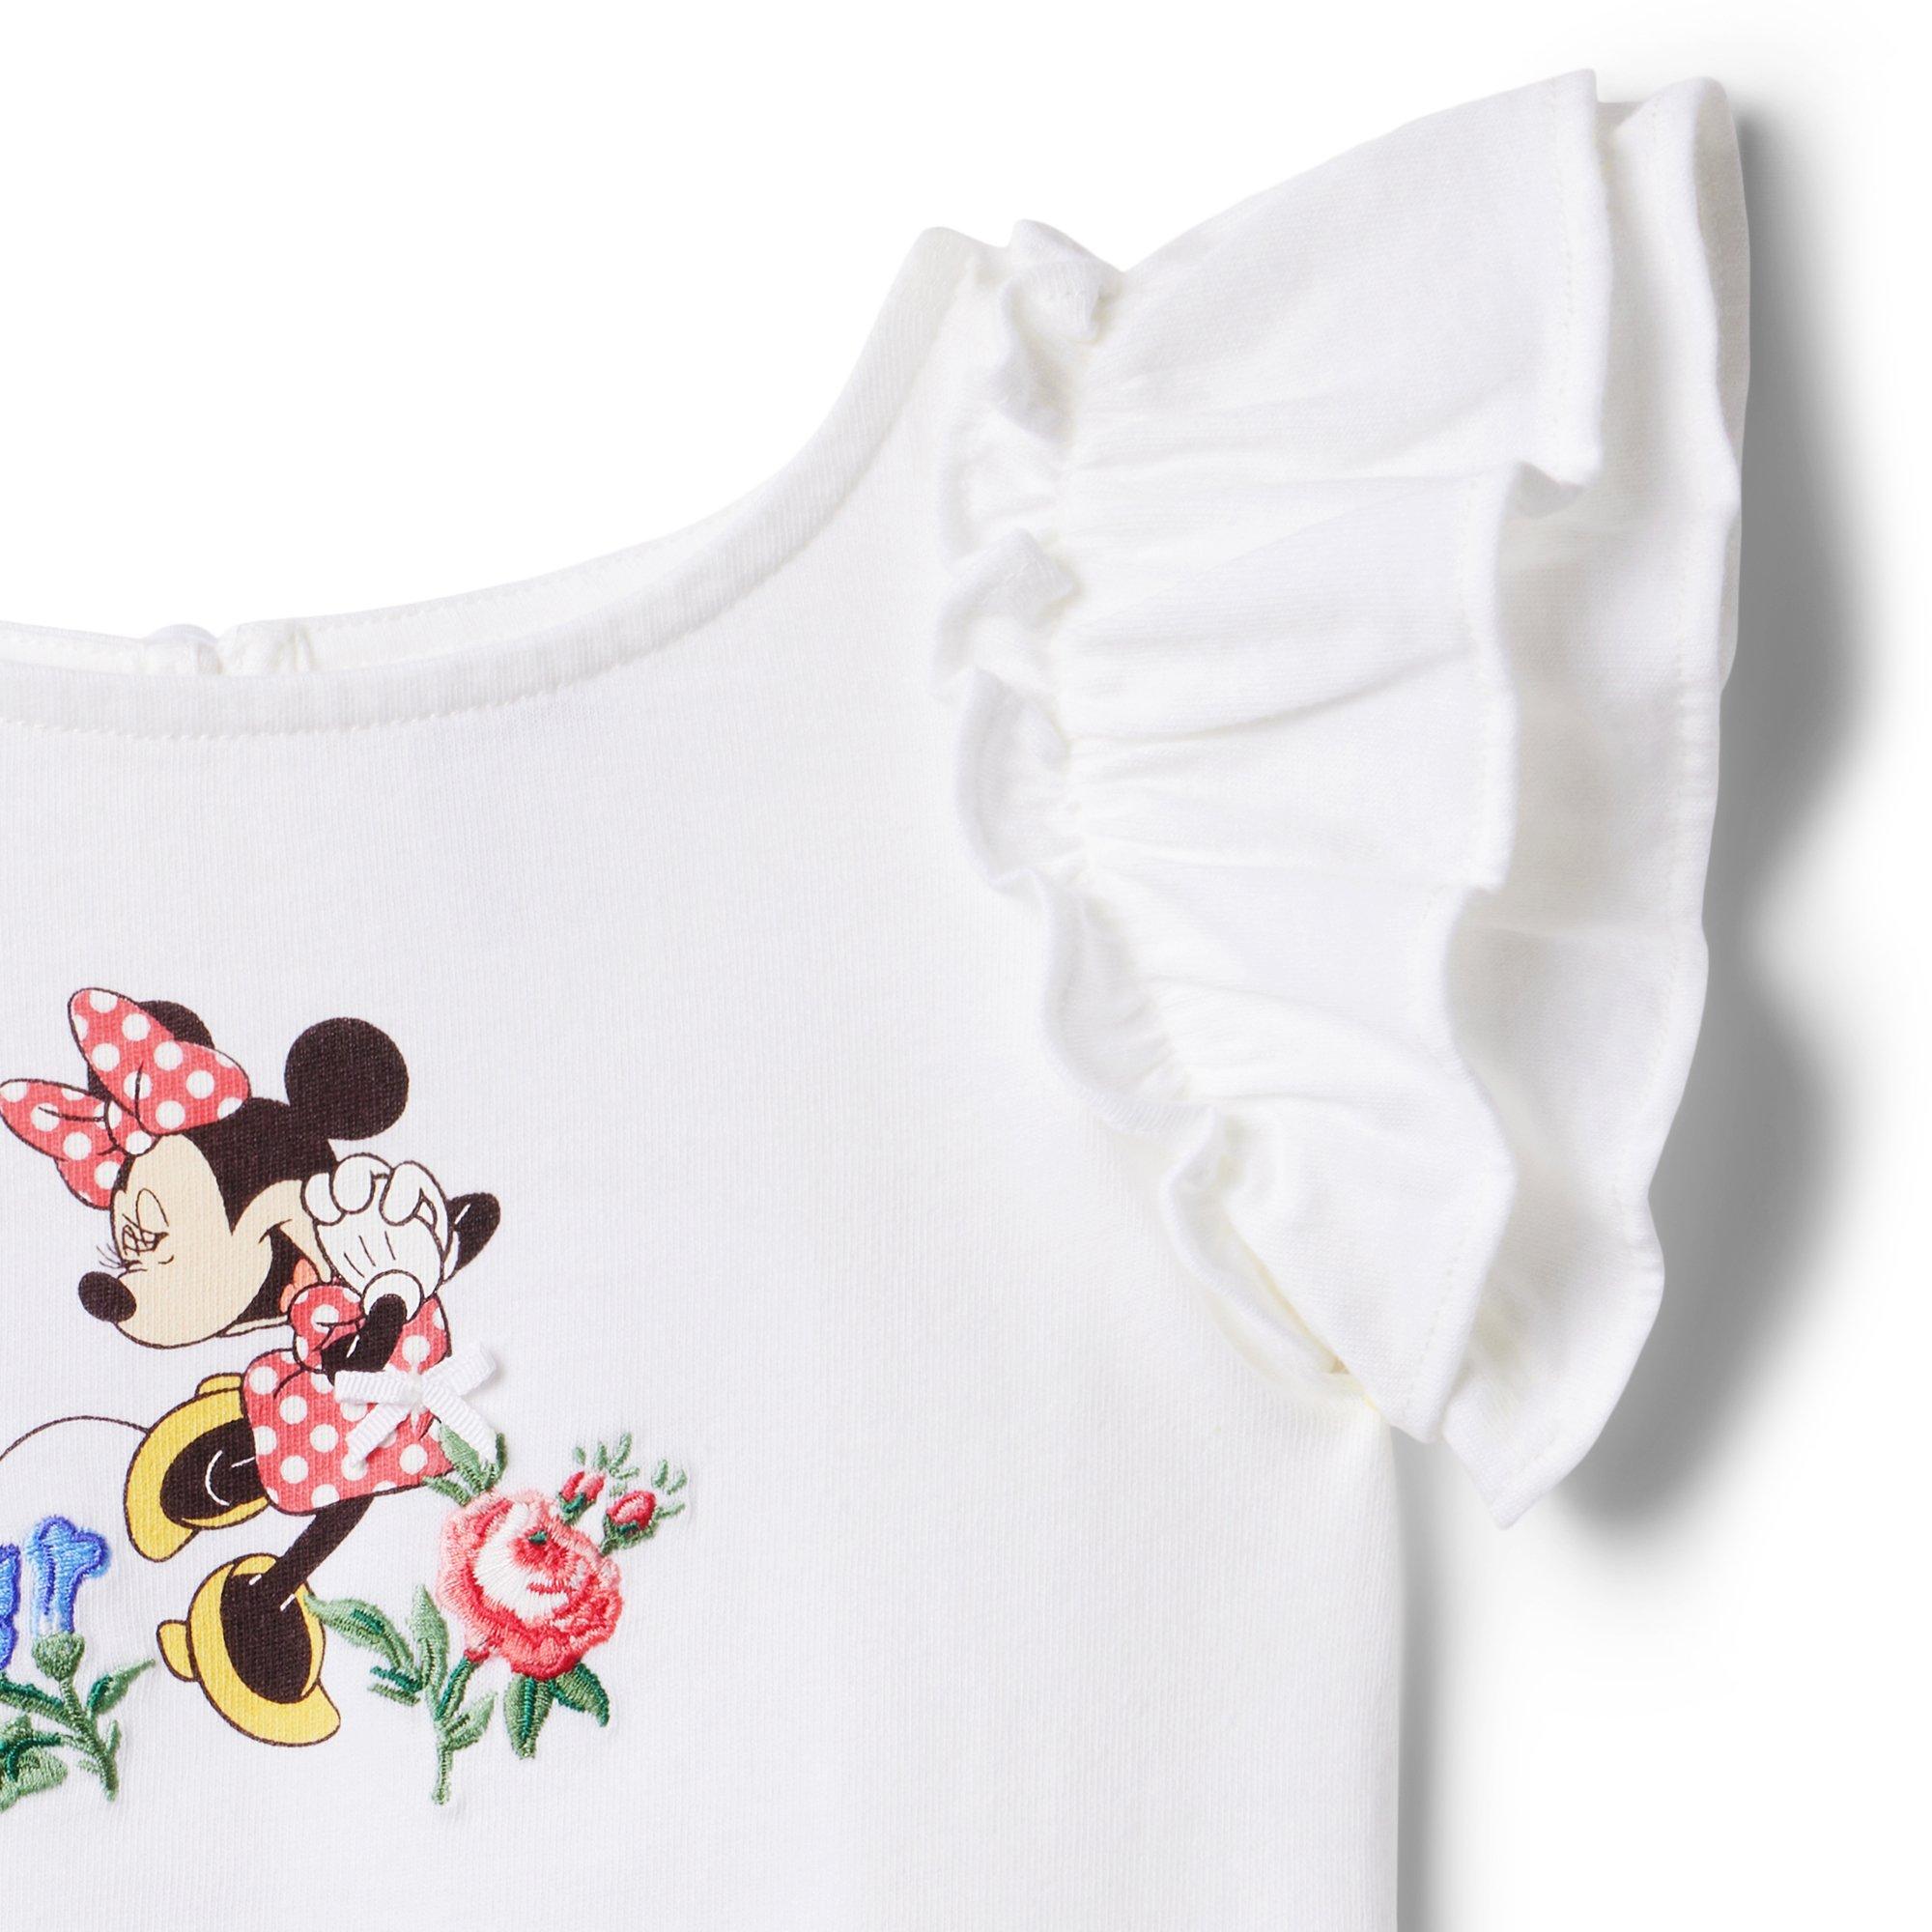 Disney Minnie Mouse Flower Tee